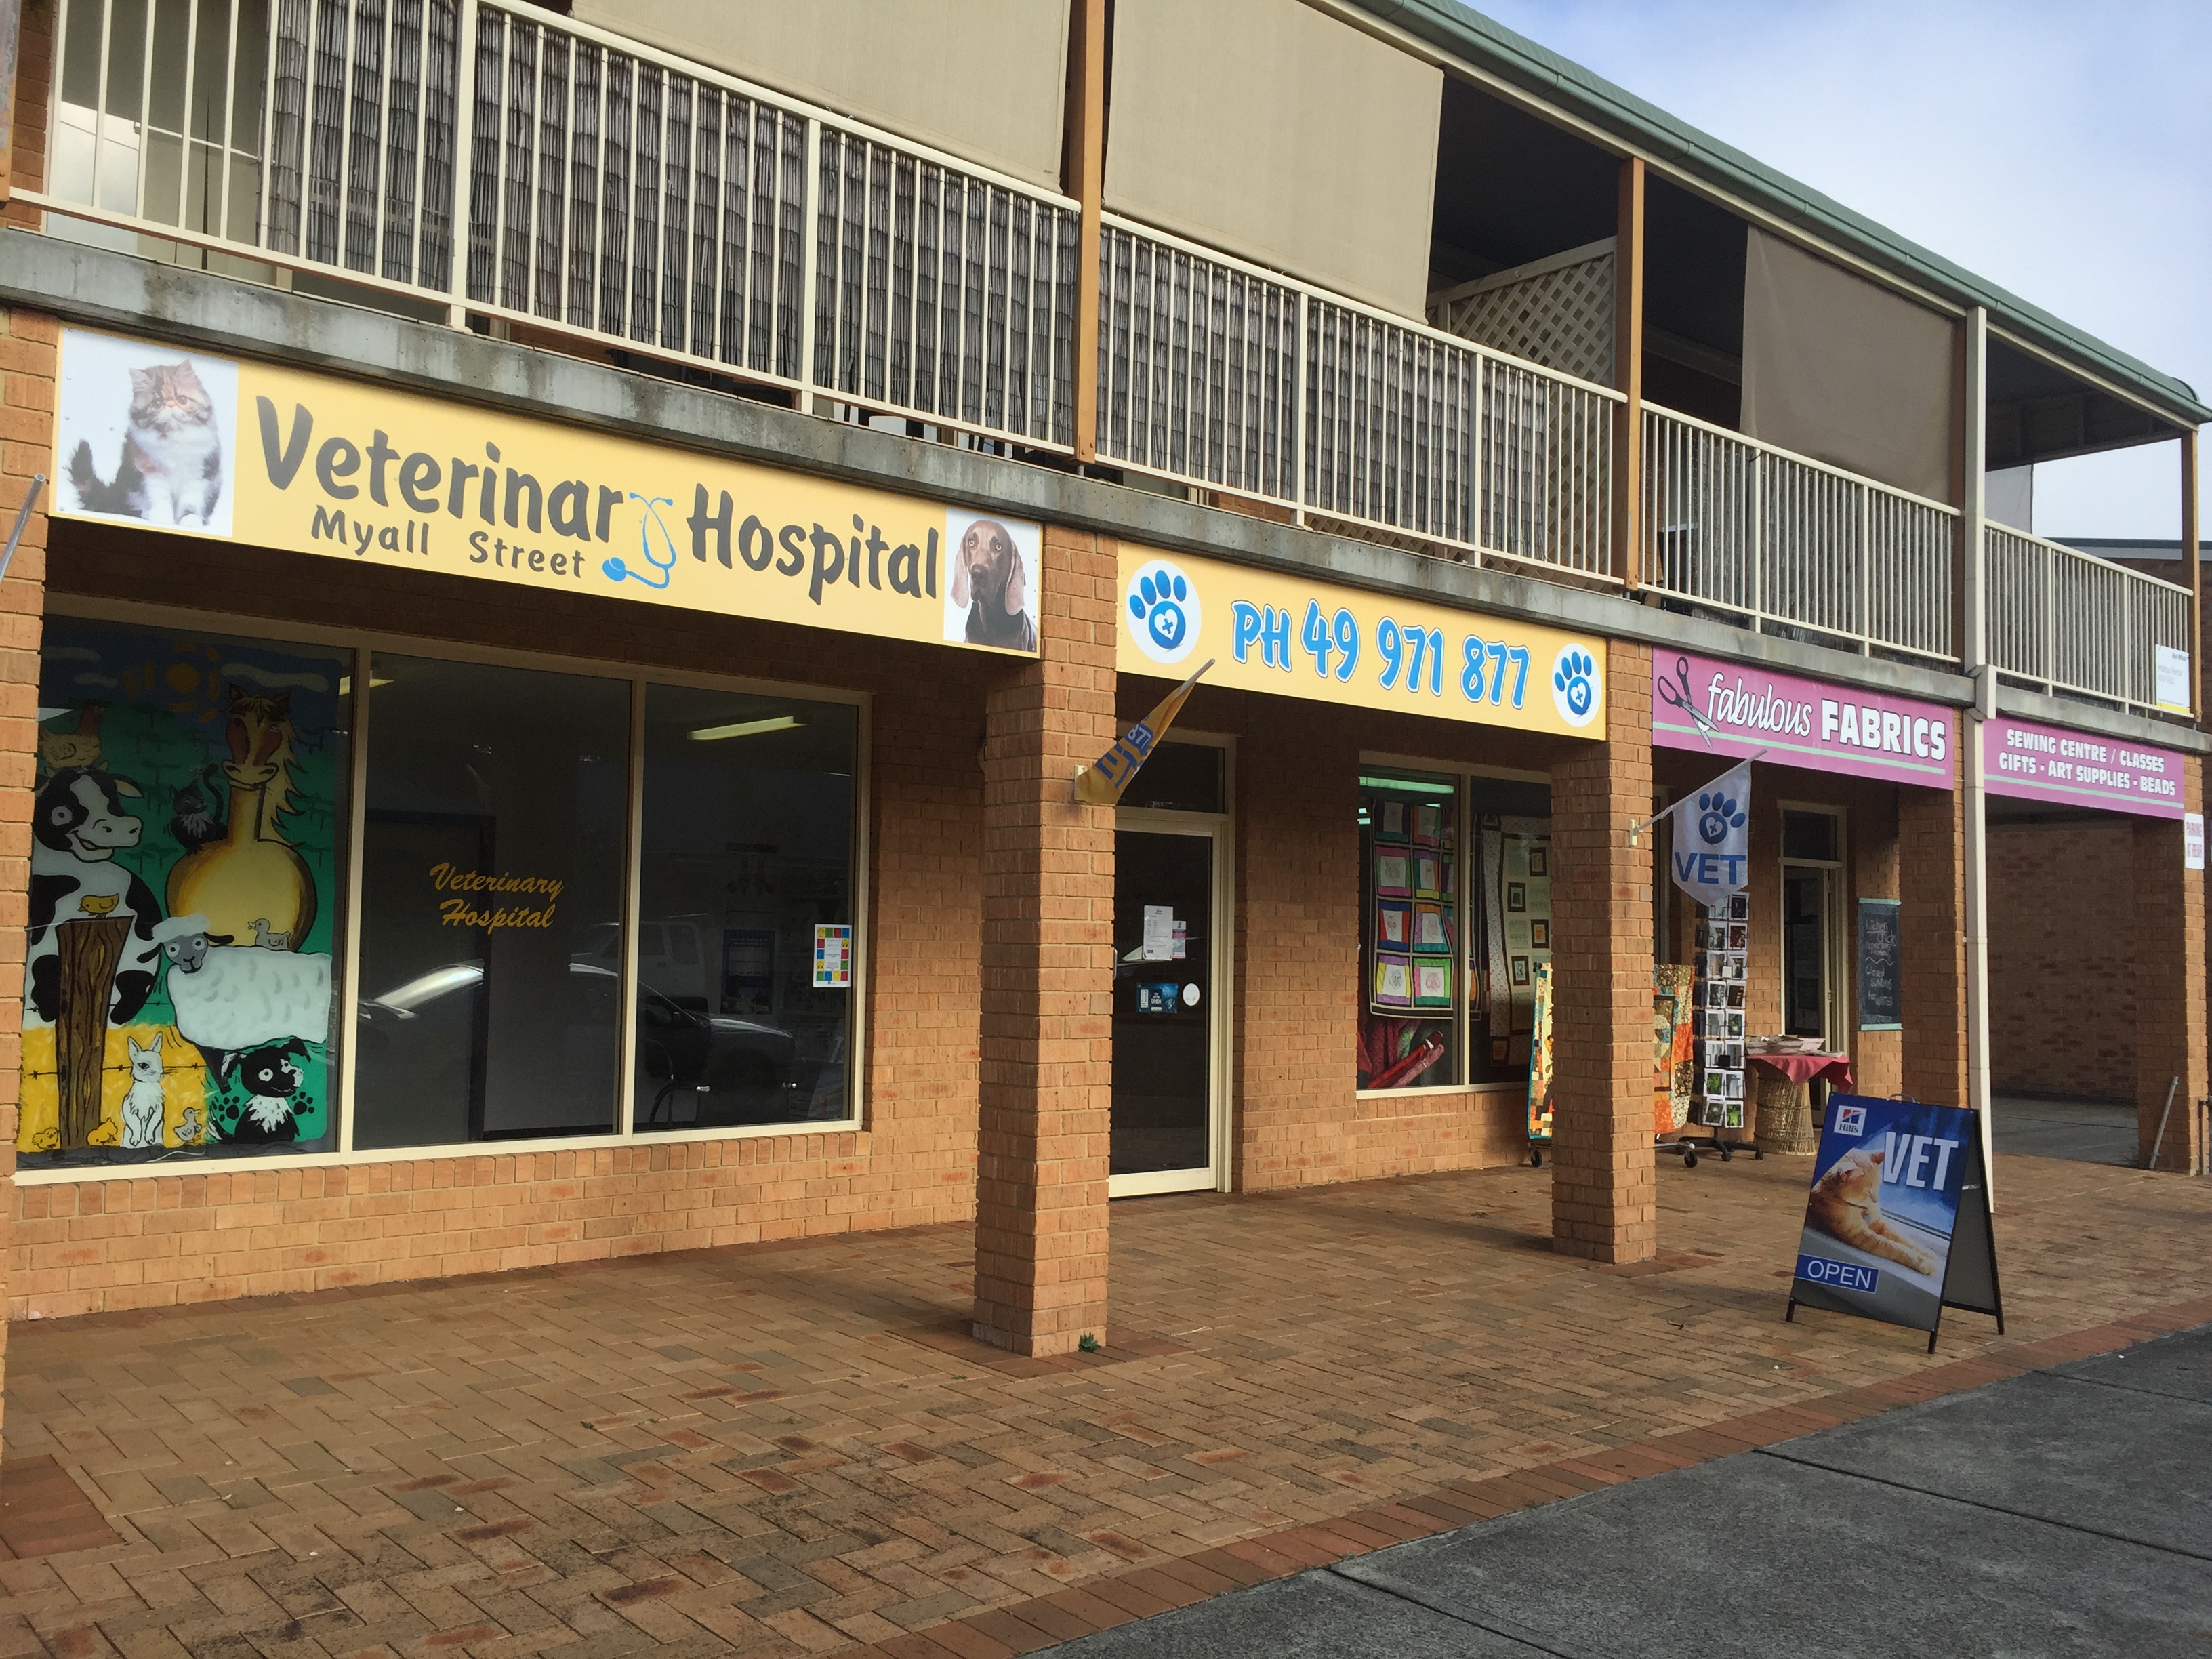 Tea Gardens Veterinary Hospital | 2/197 Myall Street, Tea Gardens, New South Wales 2324 | +61 2 4997 1877